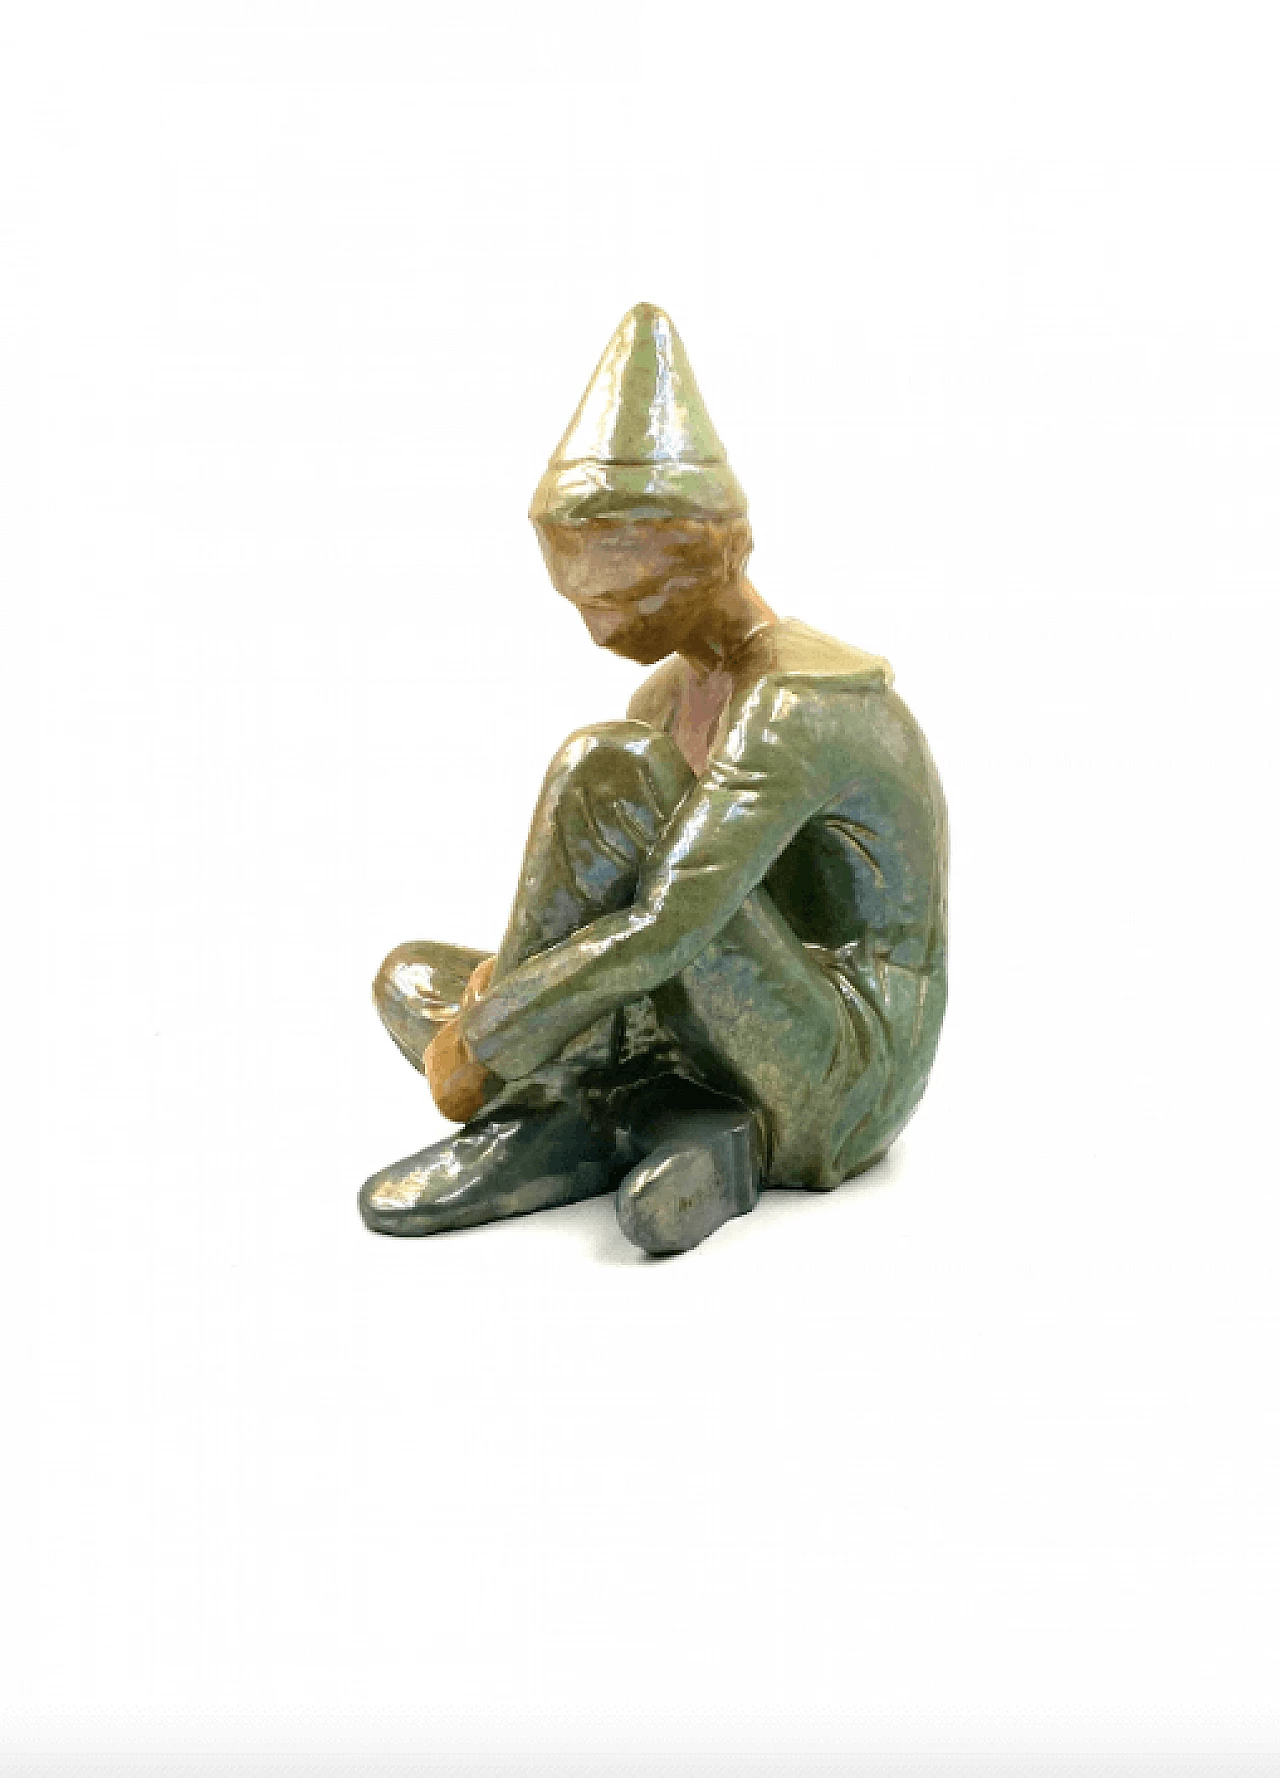 Giordano Tronconi, Seated boy, green ceramic figure from Faenza, 1950s 54